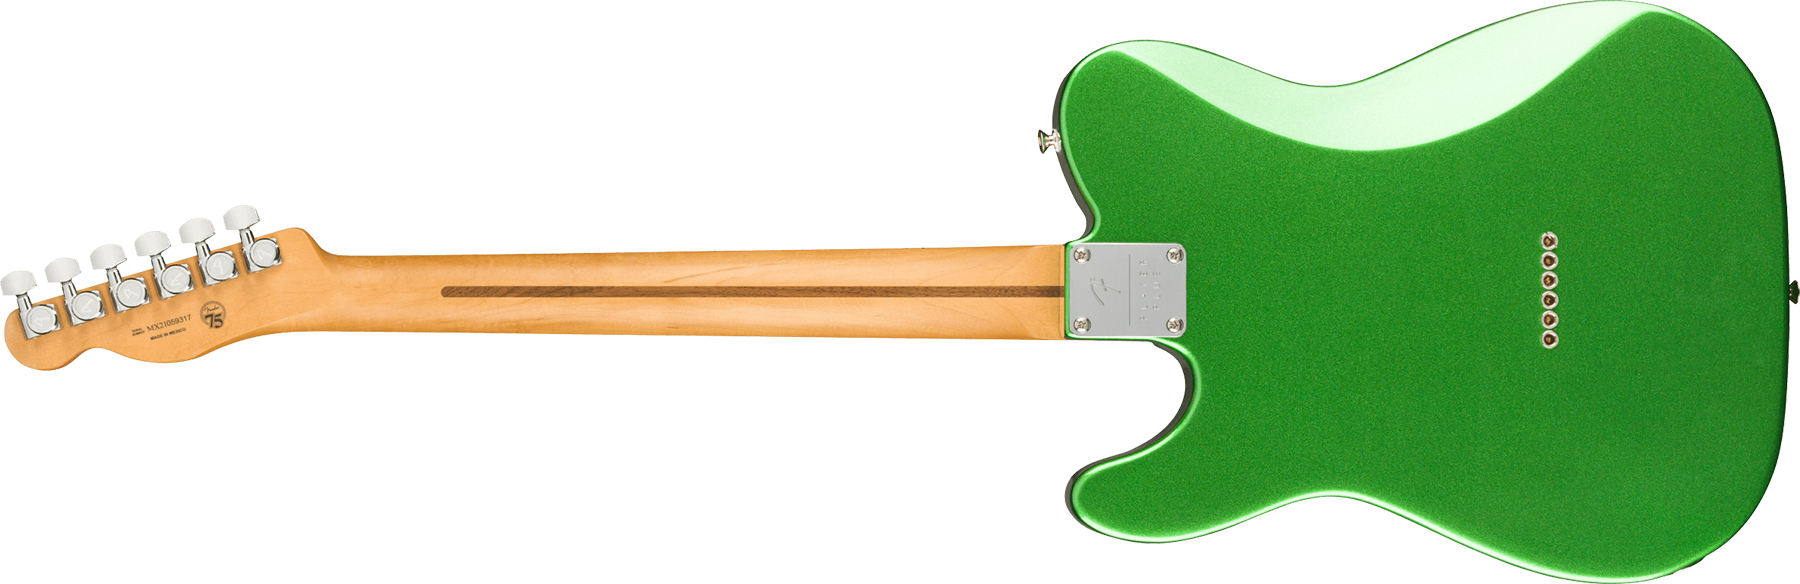 Fender Tele Player Plus Mex 2s Ht Mn - Cosmic Jade - Tel shape electric guitar - Variation 1